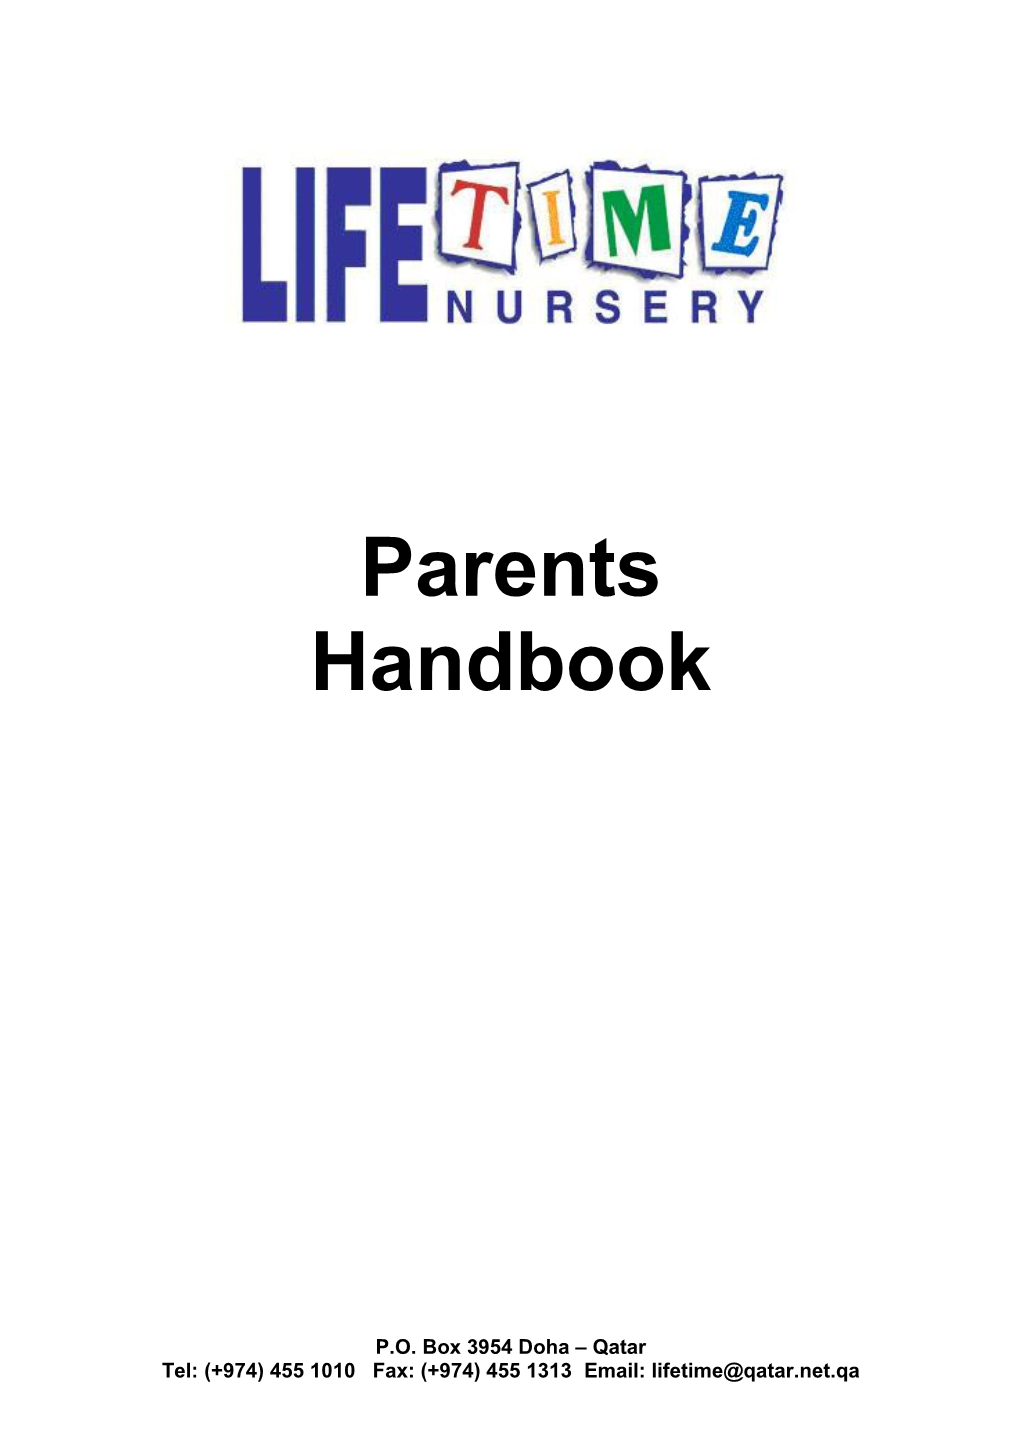 Life Time Nursery Policies and Procdures